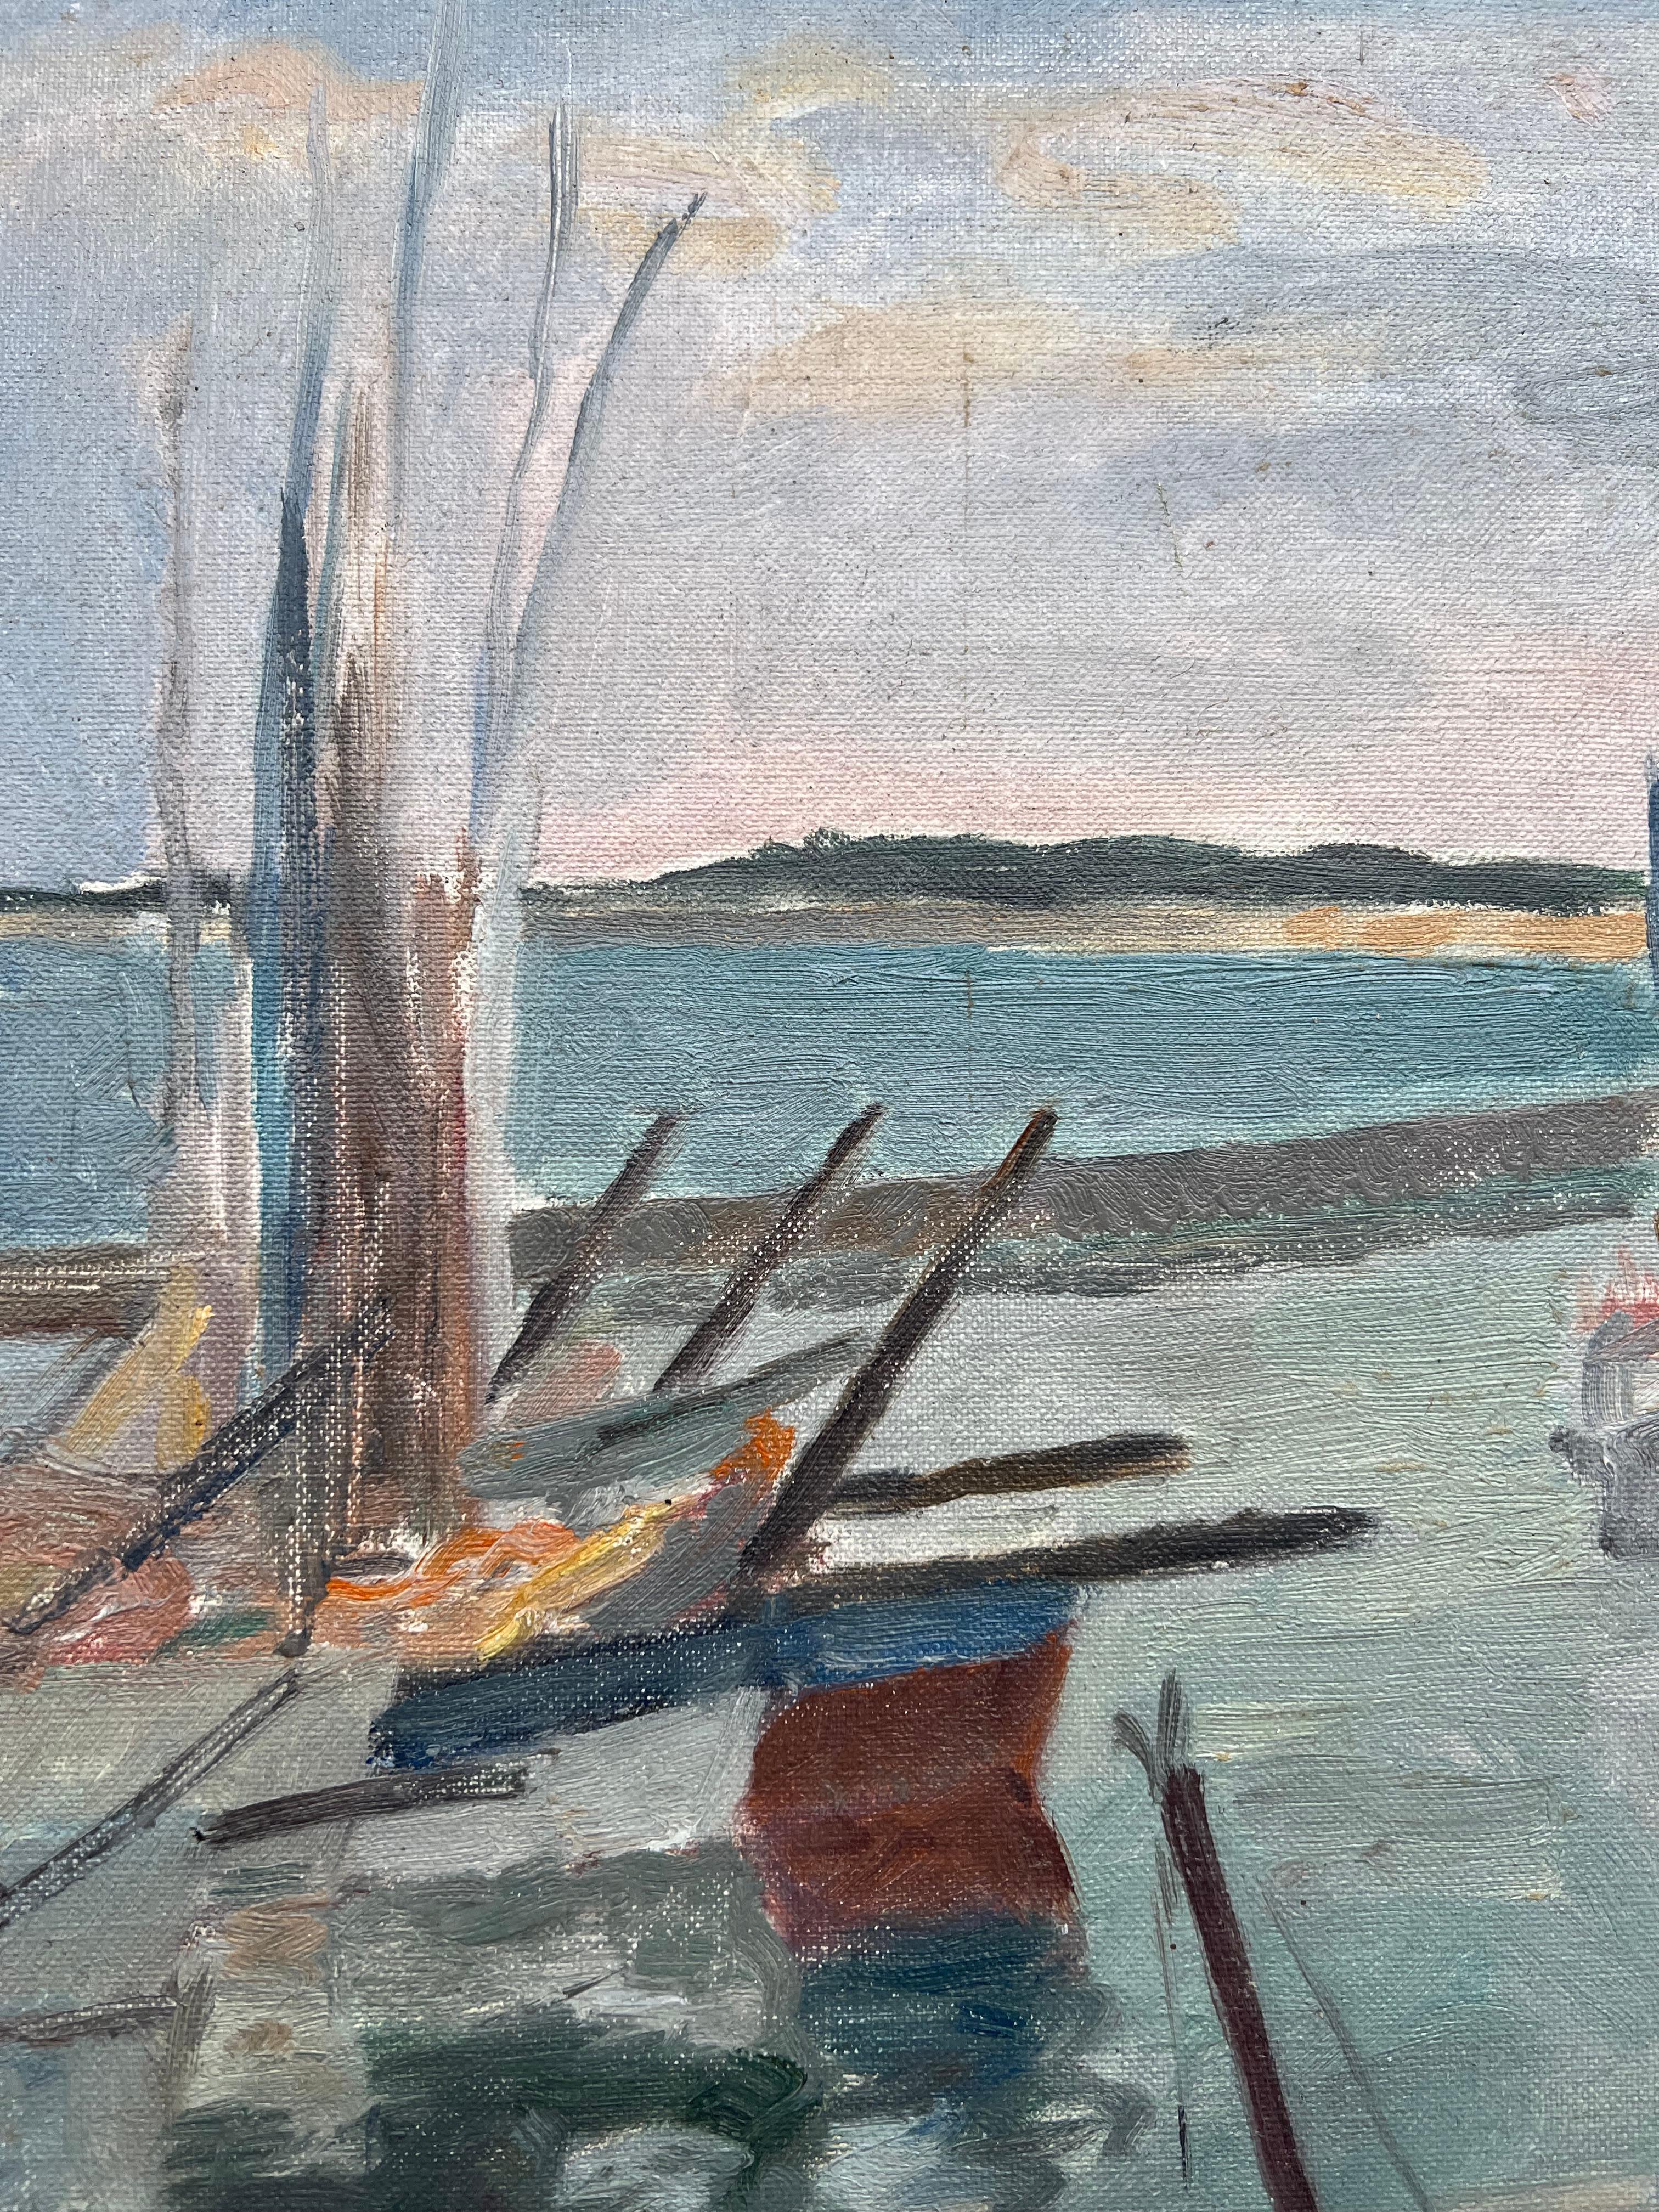 Ocean Landscape in Vendée (France), oil painting on canvas by René Levrel 3